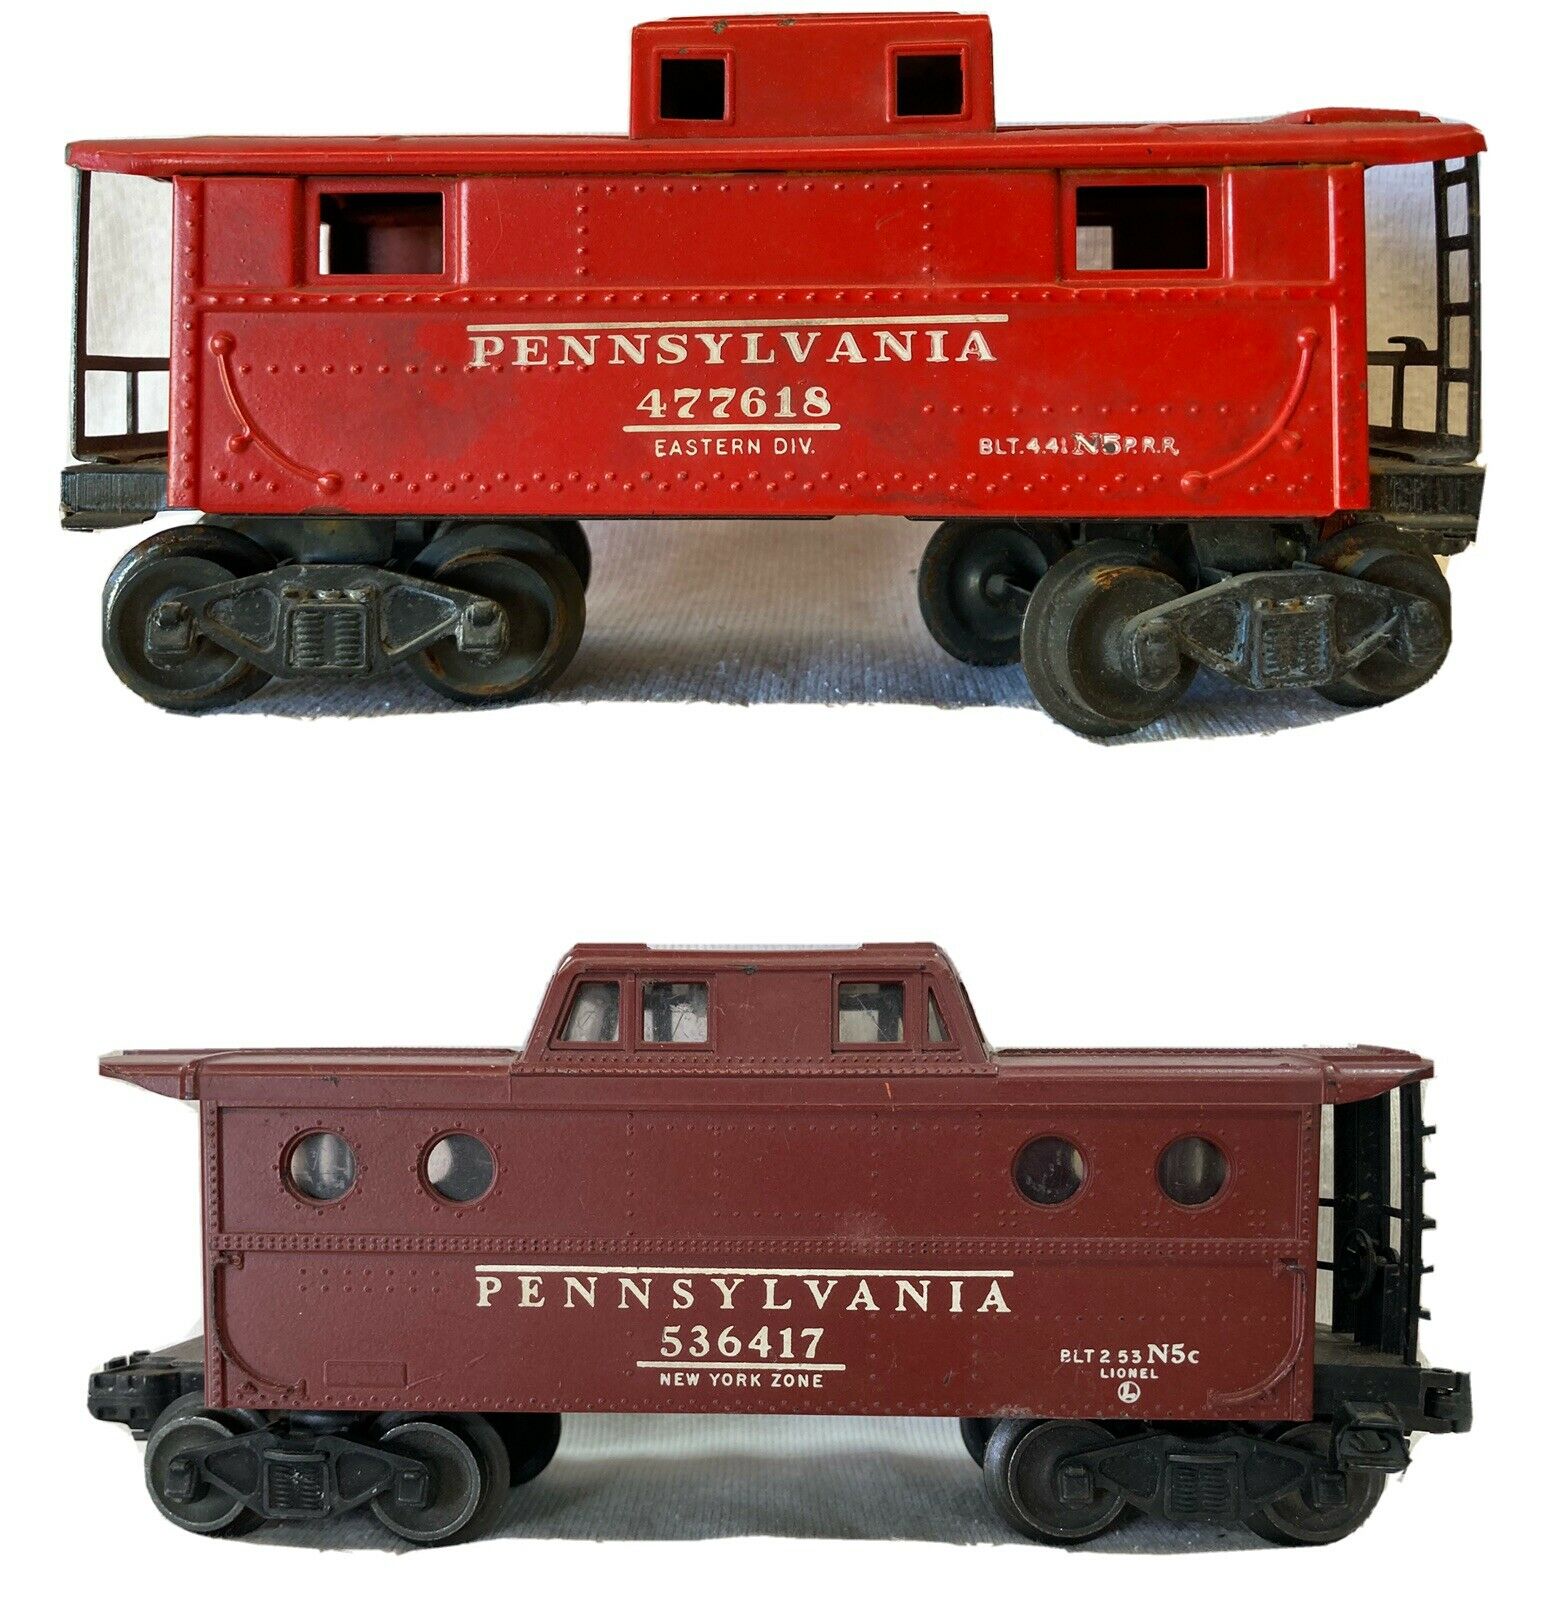 2x Lionel Trains Pennsylvania 477618 And 536417